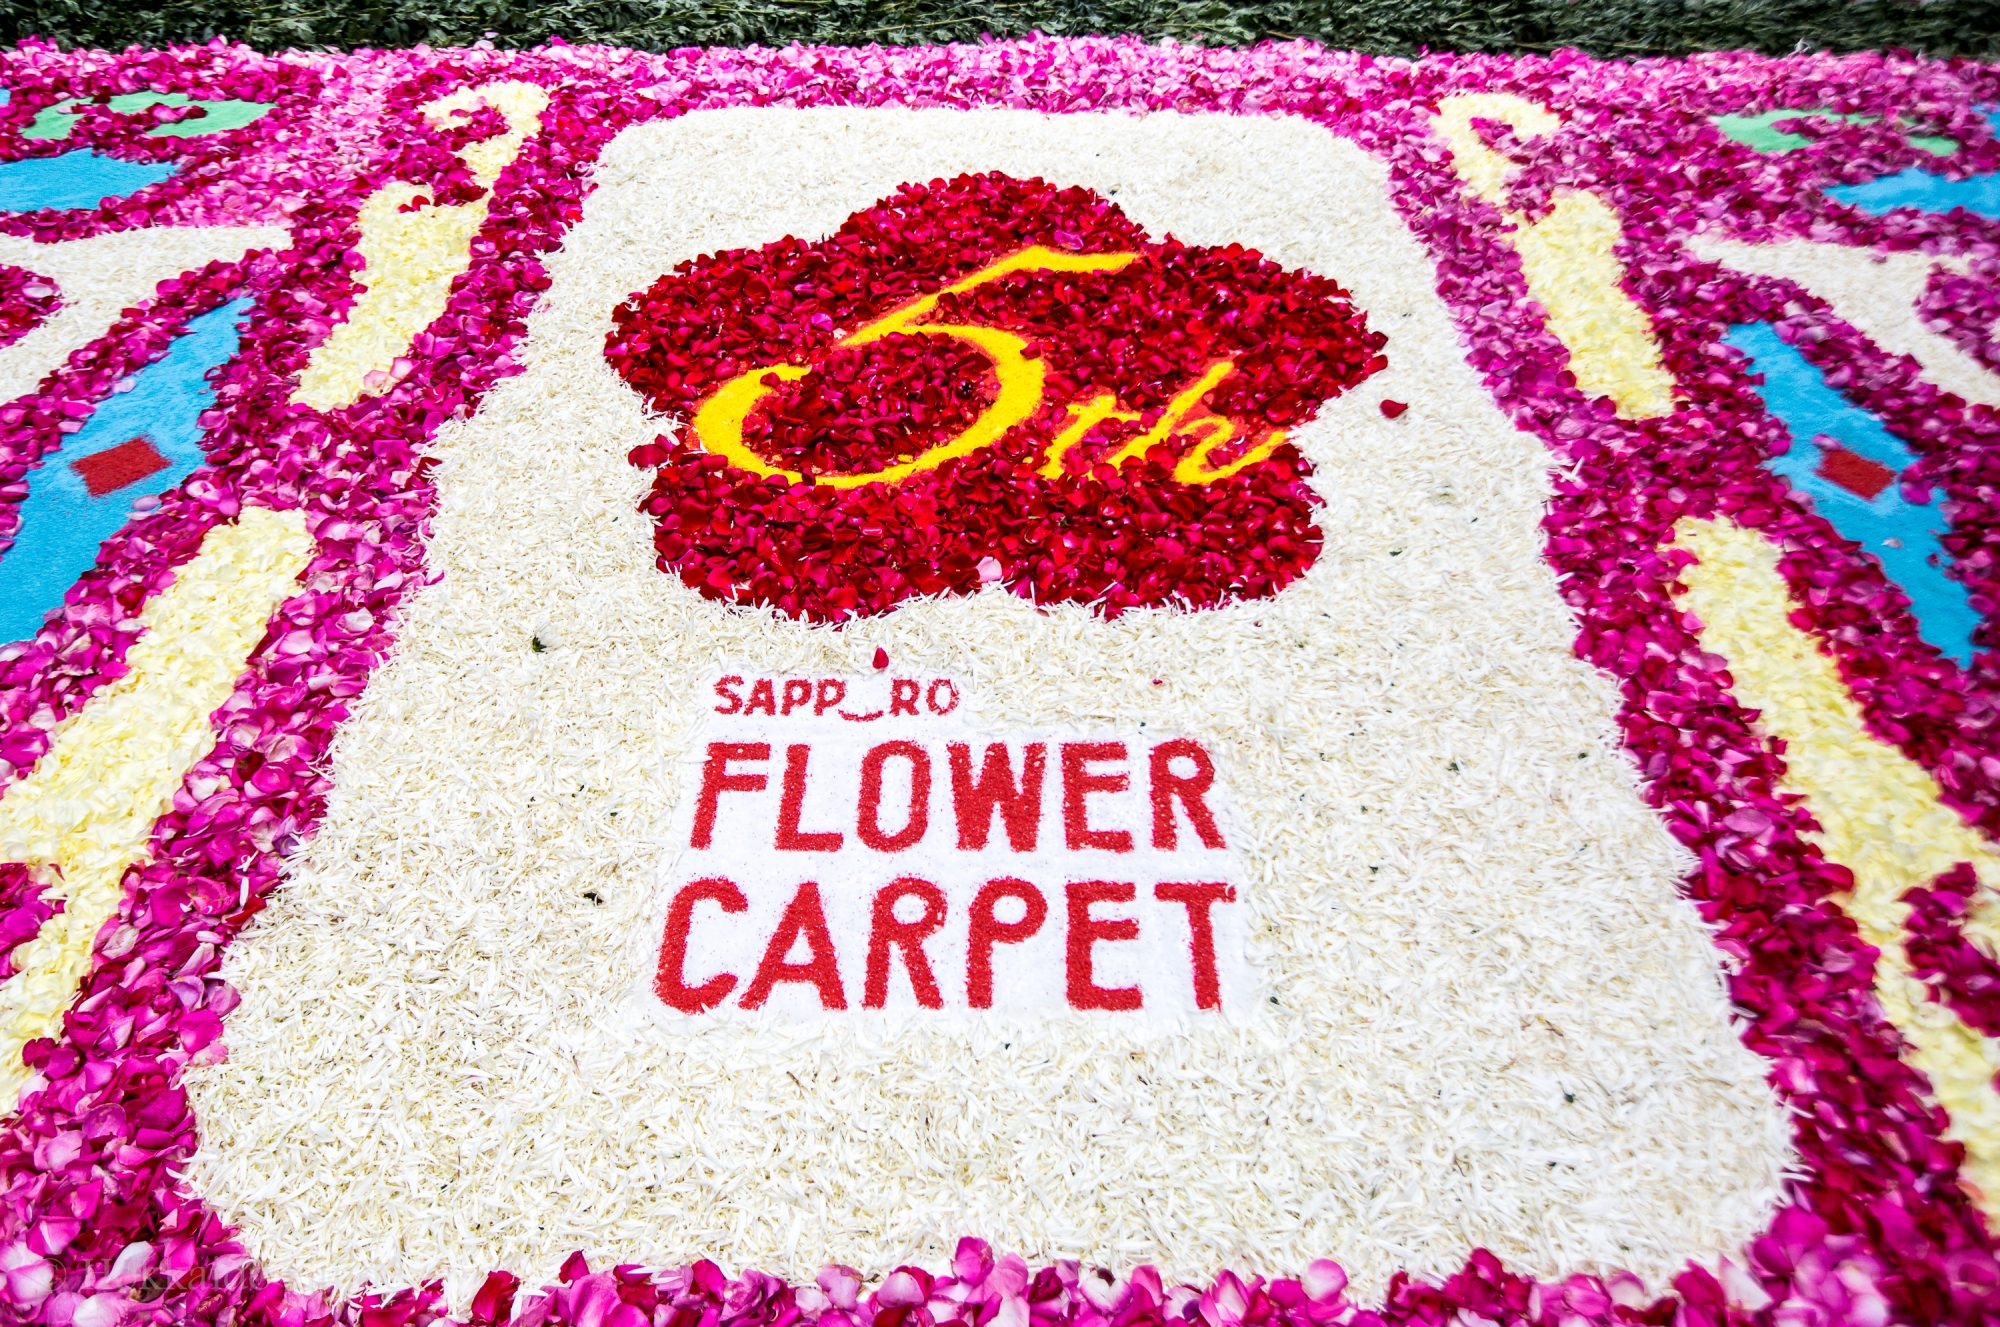 the 5th Sapporo Flower Carpet